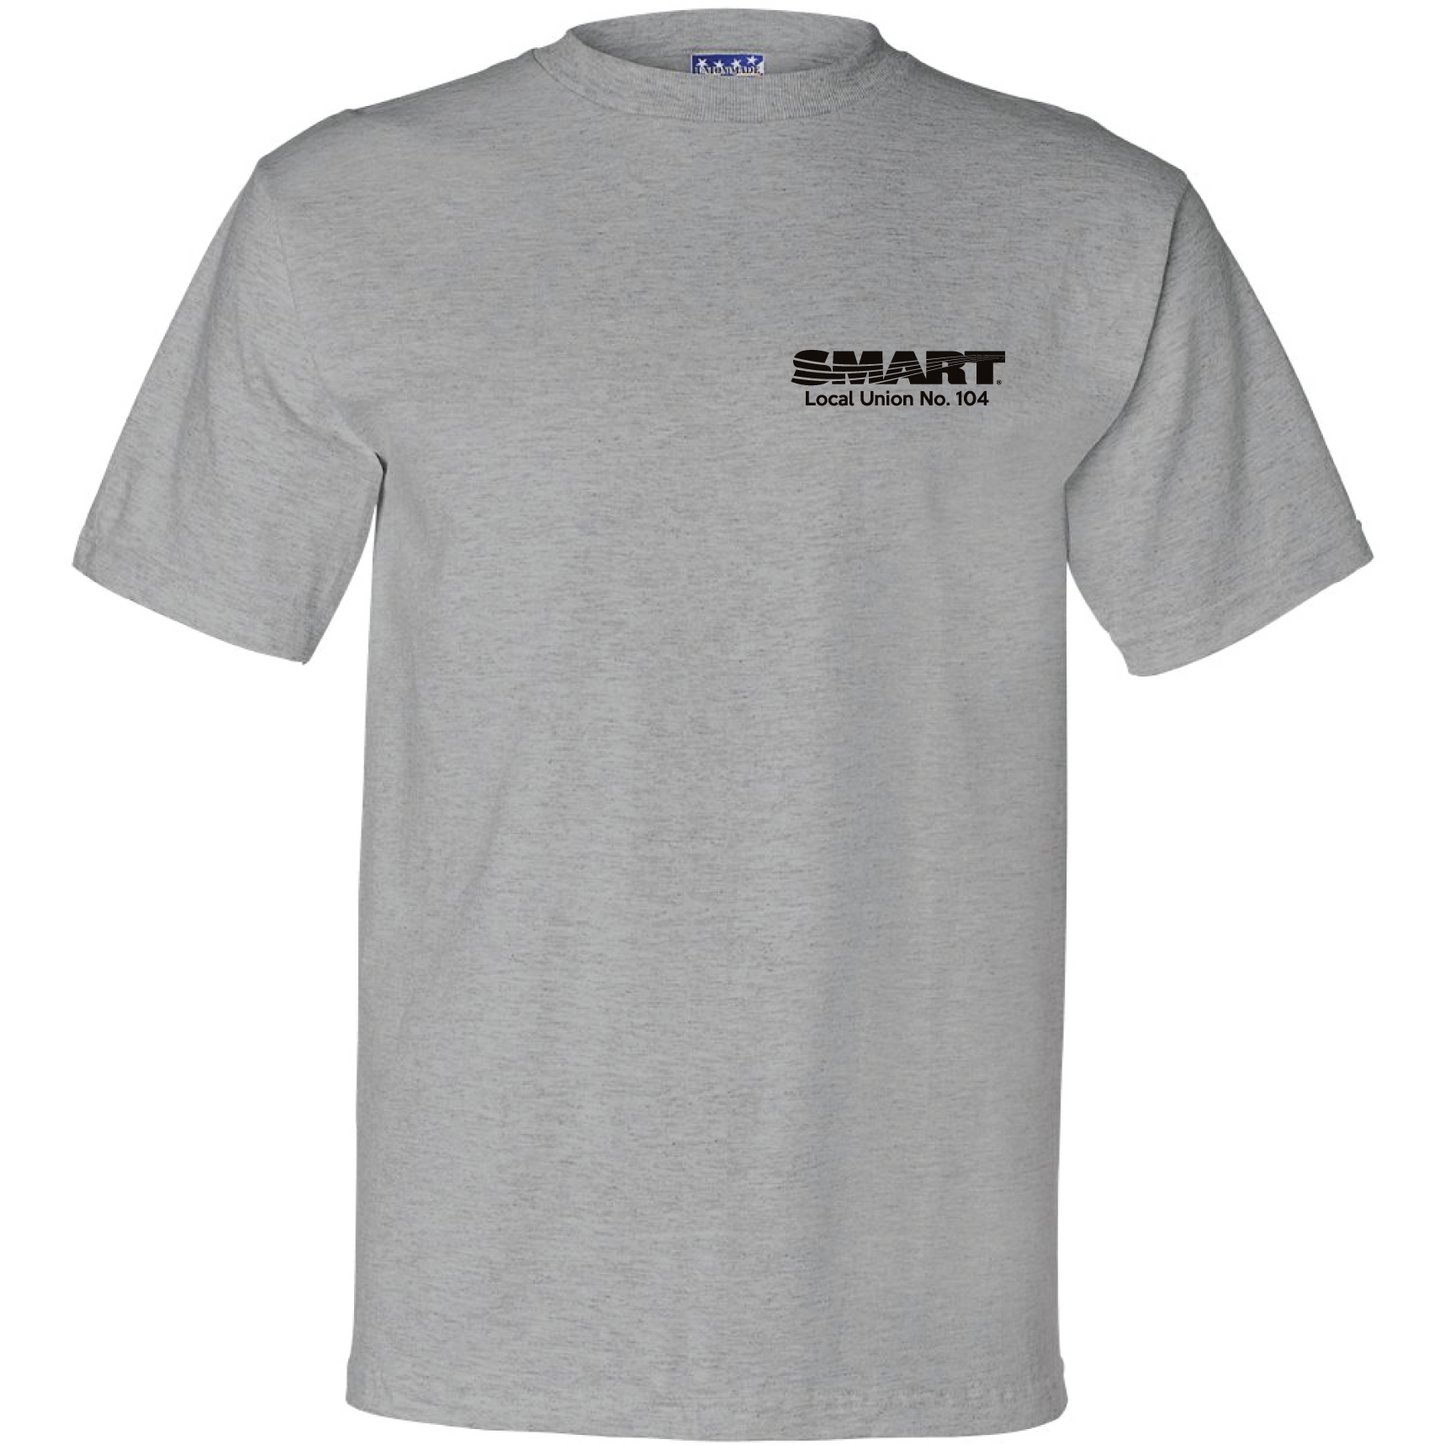 SMART 104 "Traditional" T-shirt